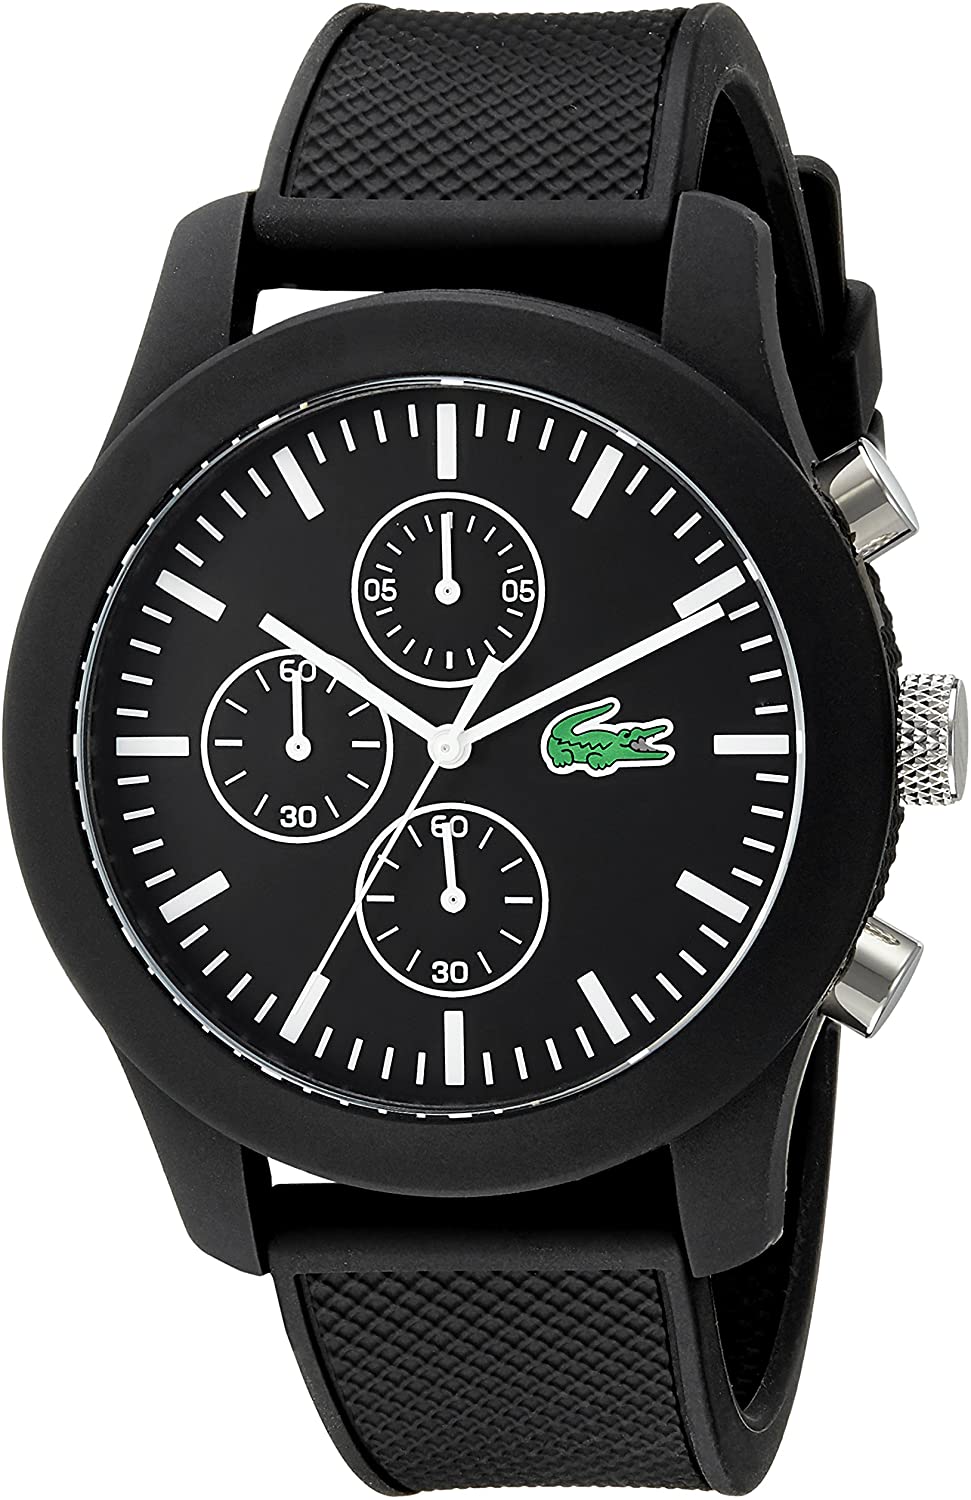 Lacoste Men's 2010821 12.12 Analog Display Japanese Quartz Black Watch